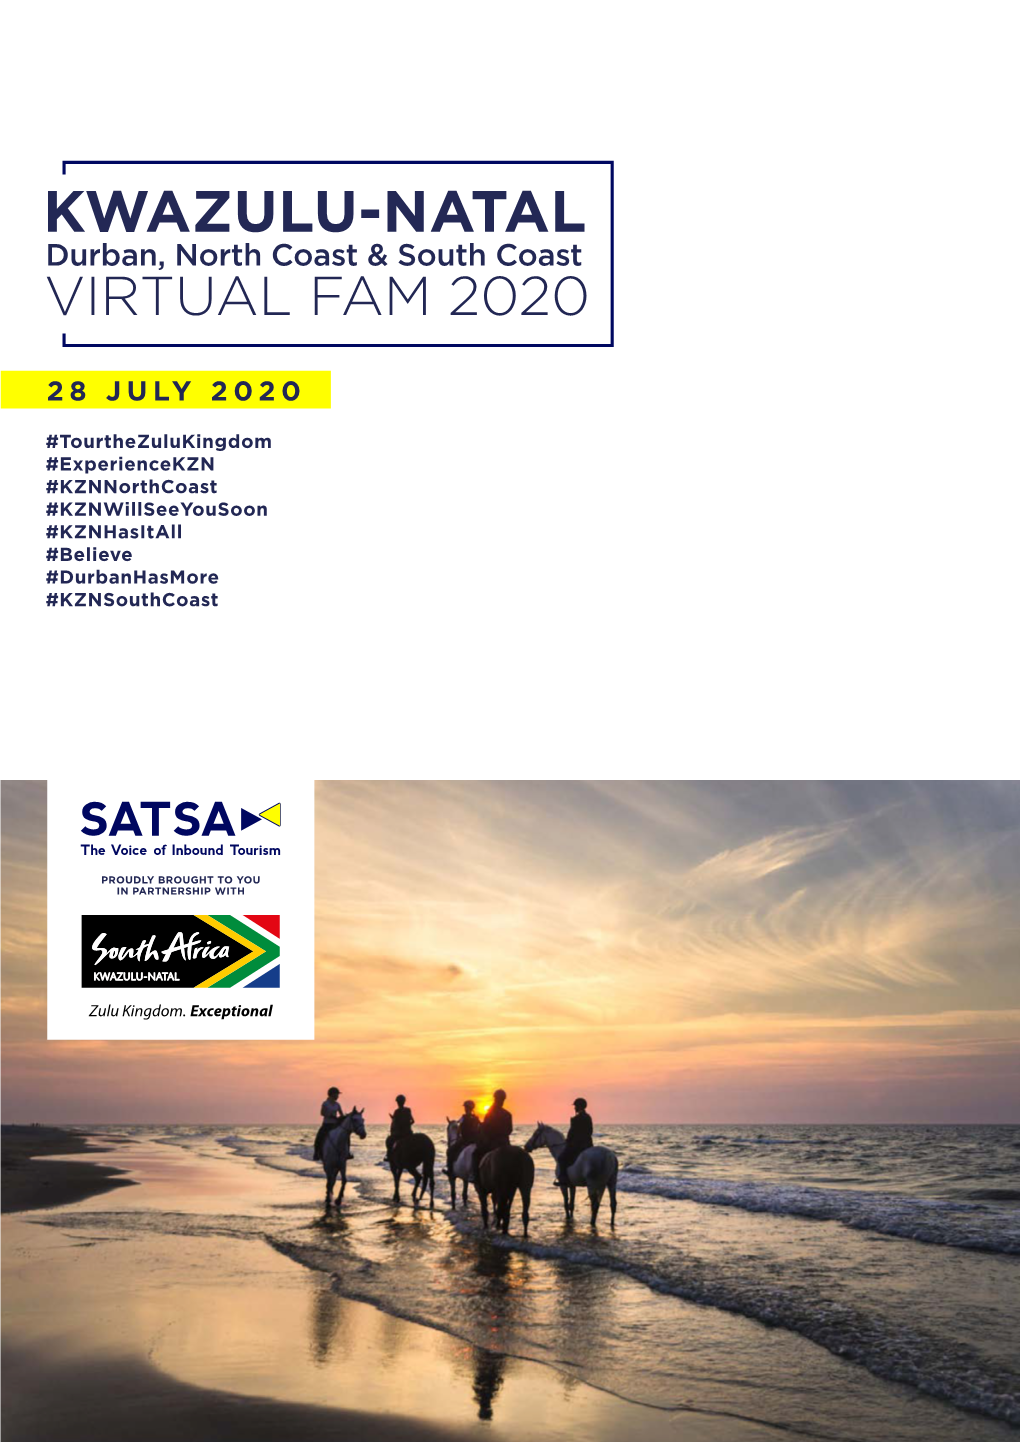 KWAZULU-NATAL Durban, North Coast & South Coast VIRTUAL FAM 2020